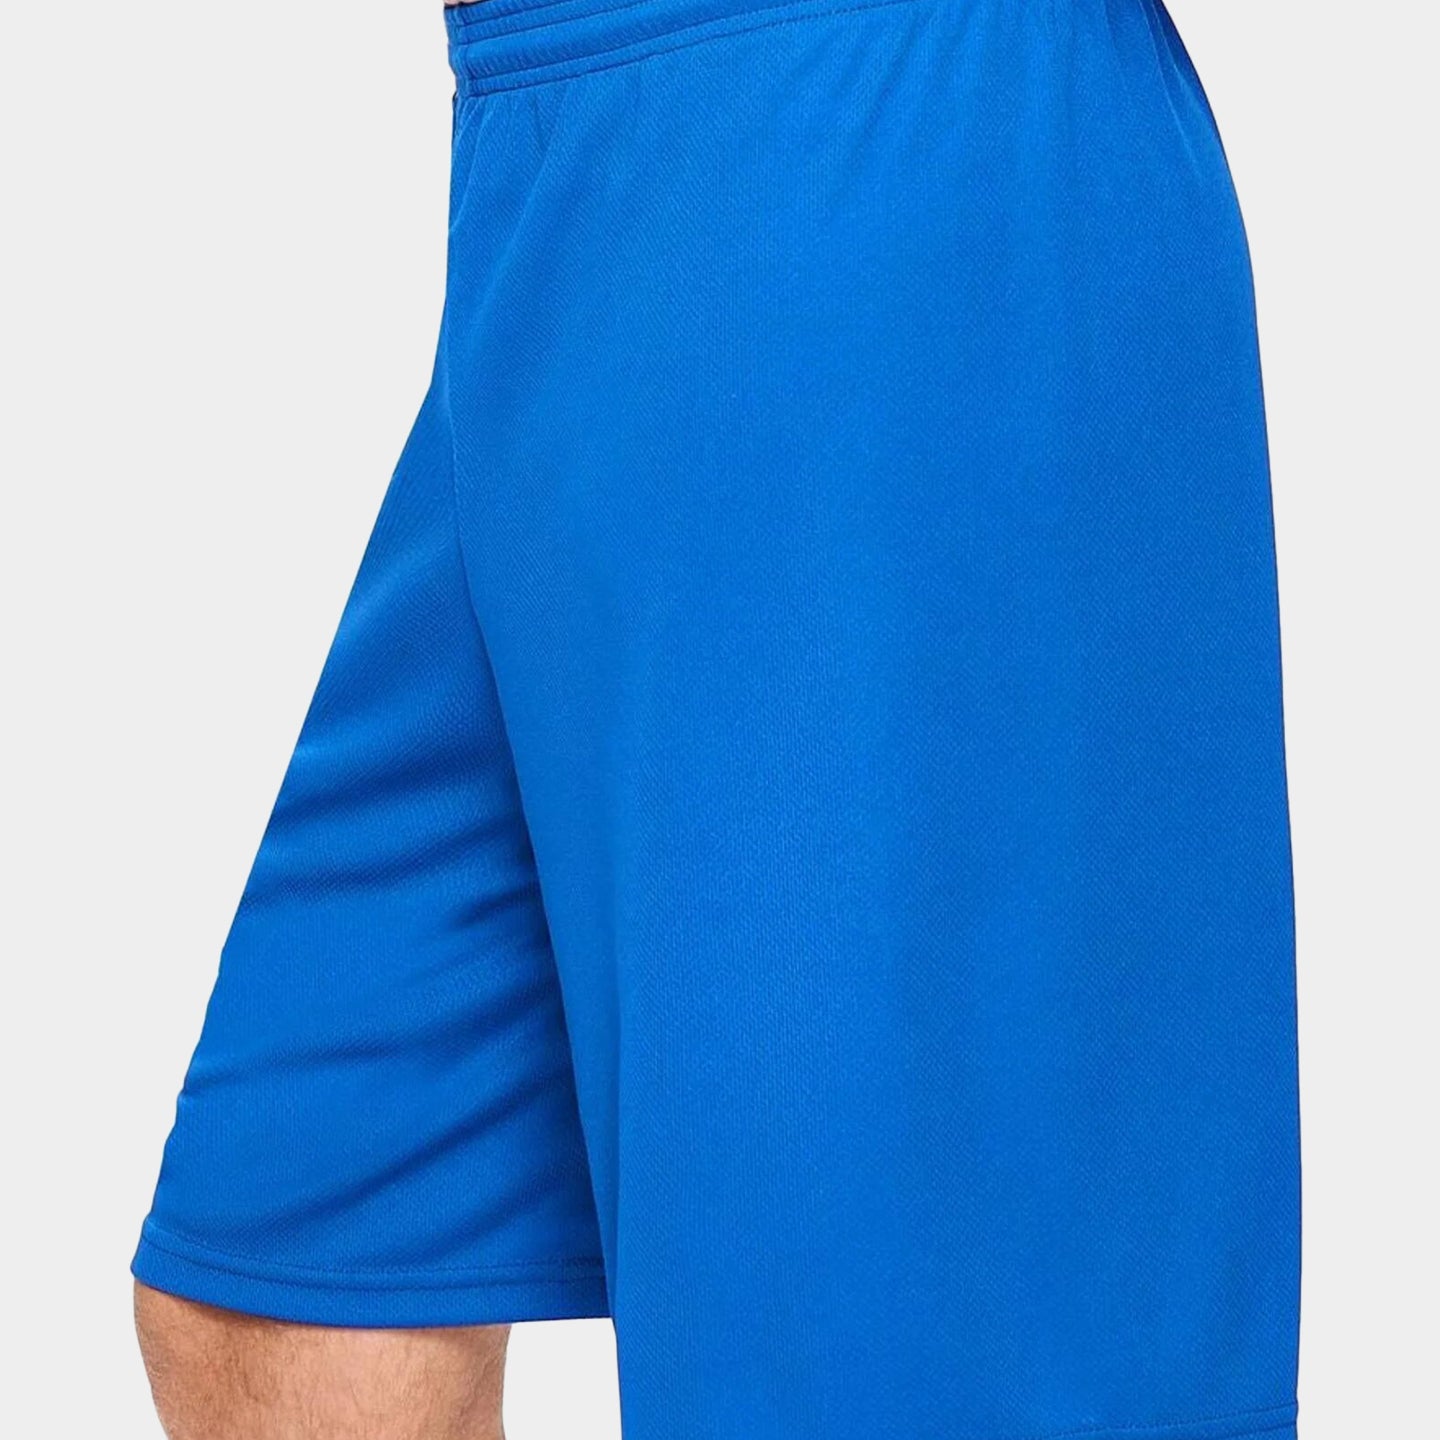 Expert Brand Oxymesh Men's Performance Training Shorts, XL, Royal Blue A1